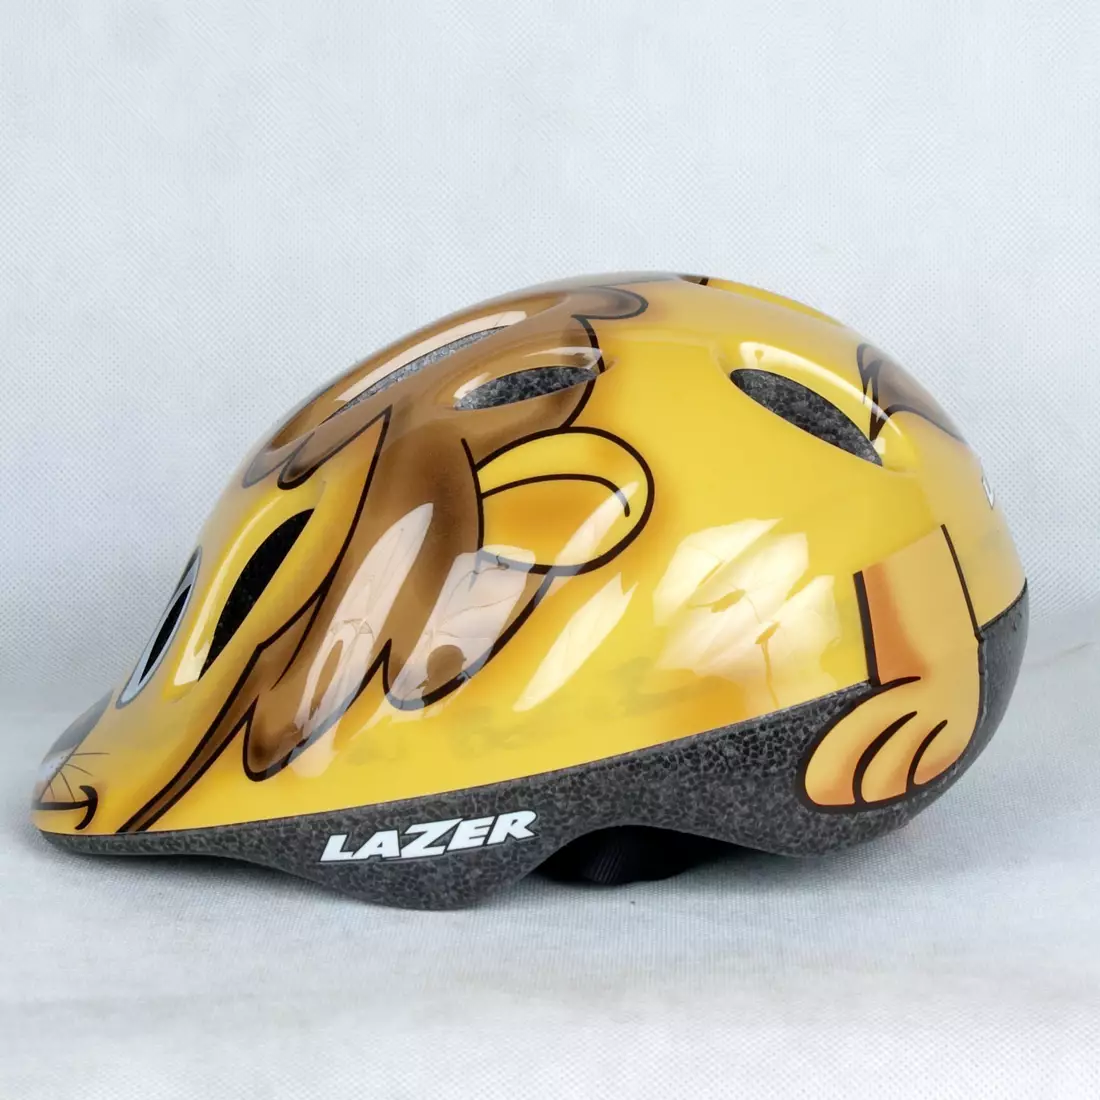 LAZER - LAZER MAX children's helmet - left